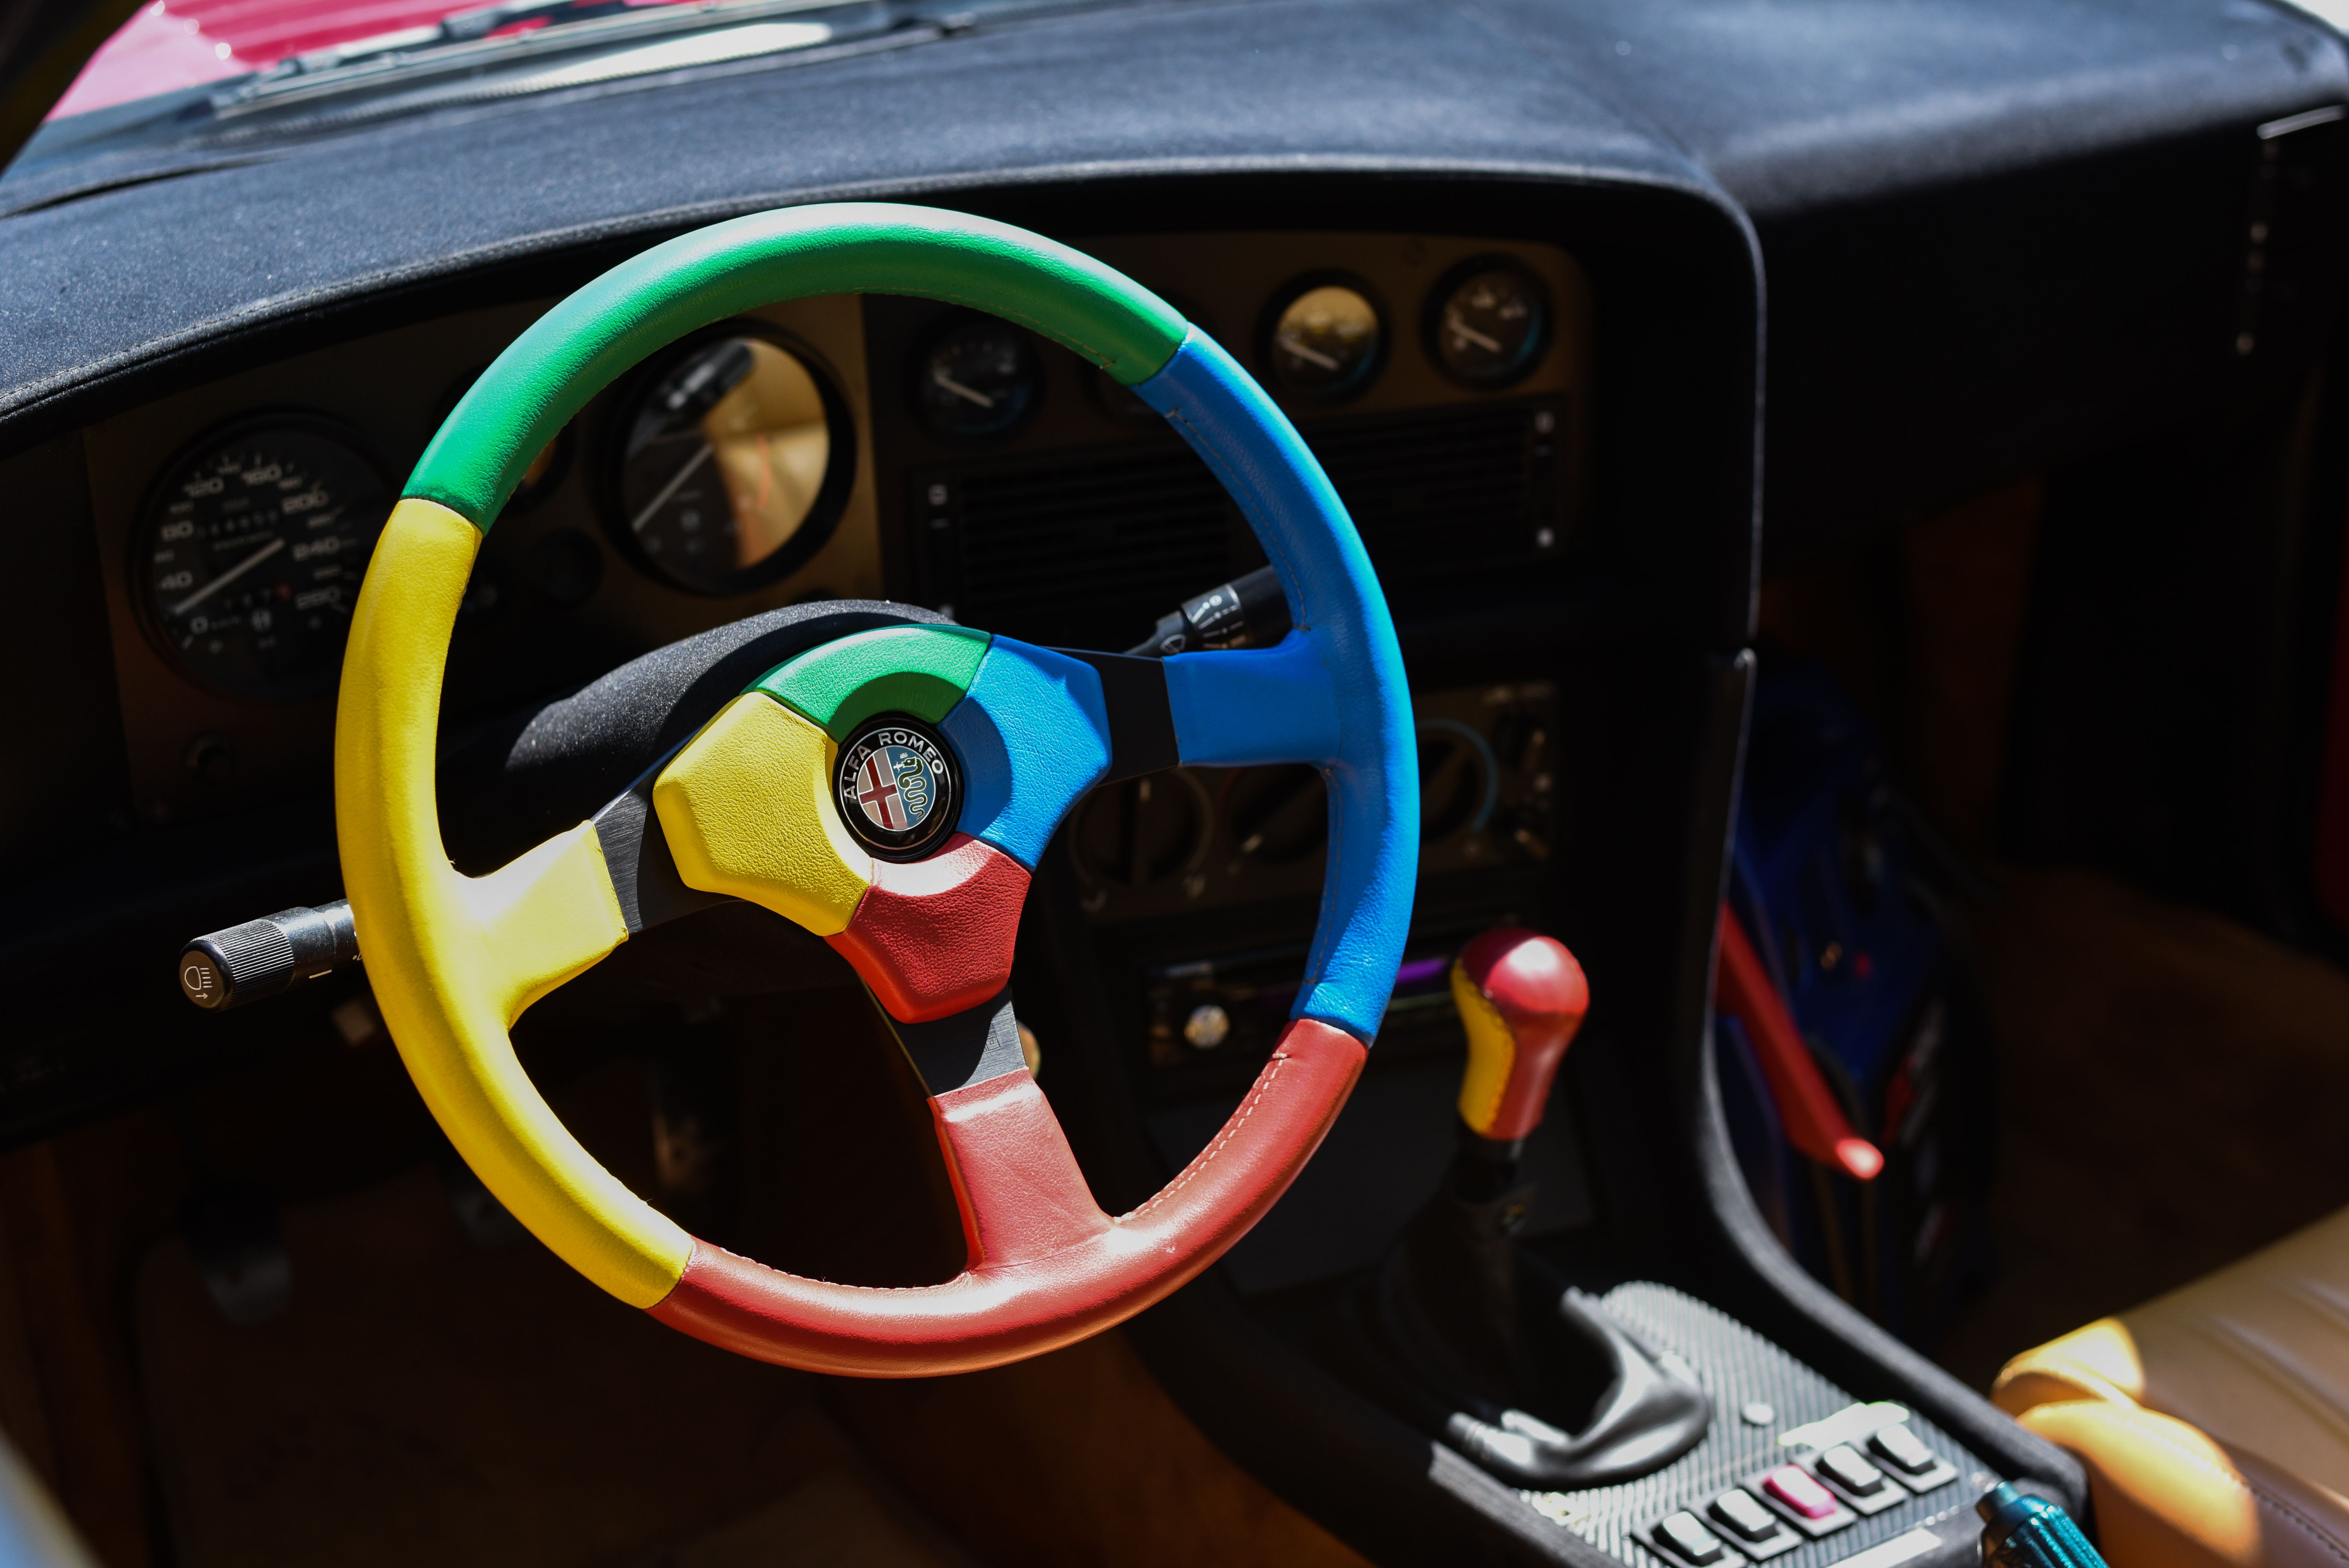 Alfa SZ Steering wheel for RiversCars.com Via @GingerlyCaptured